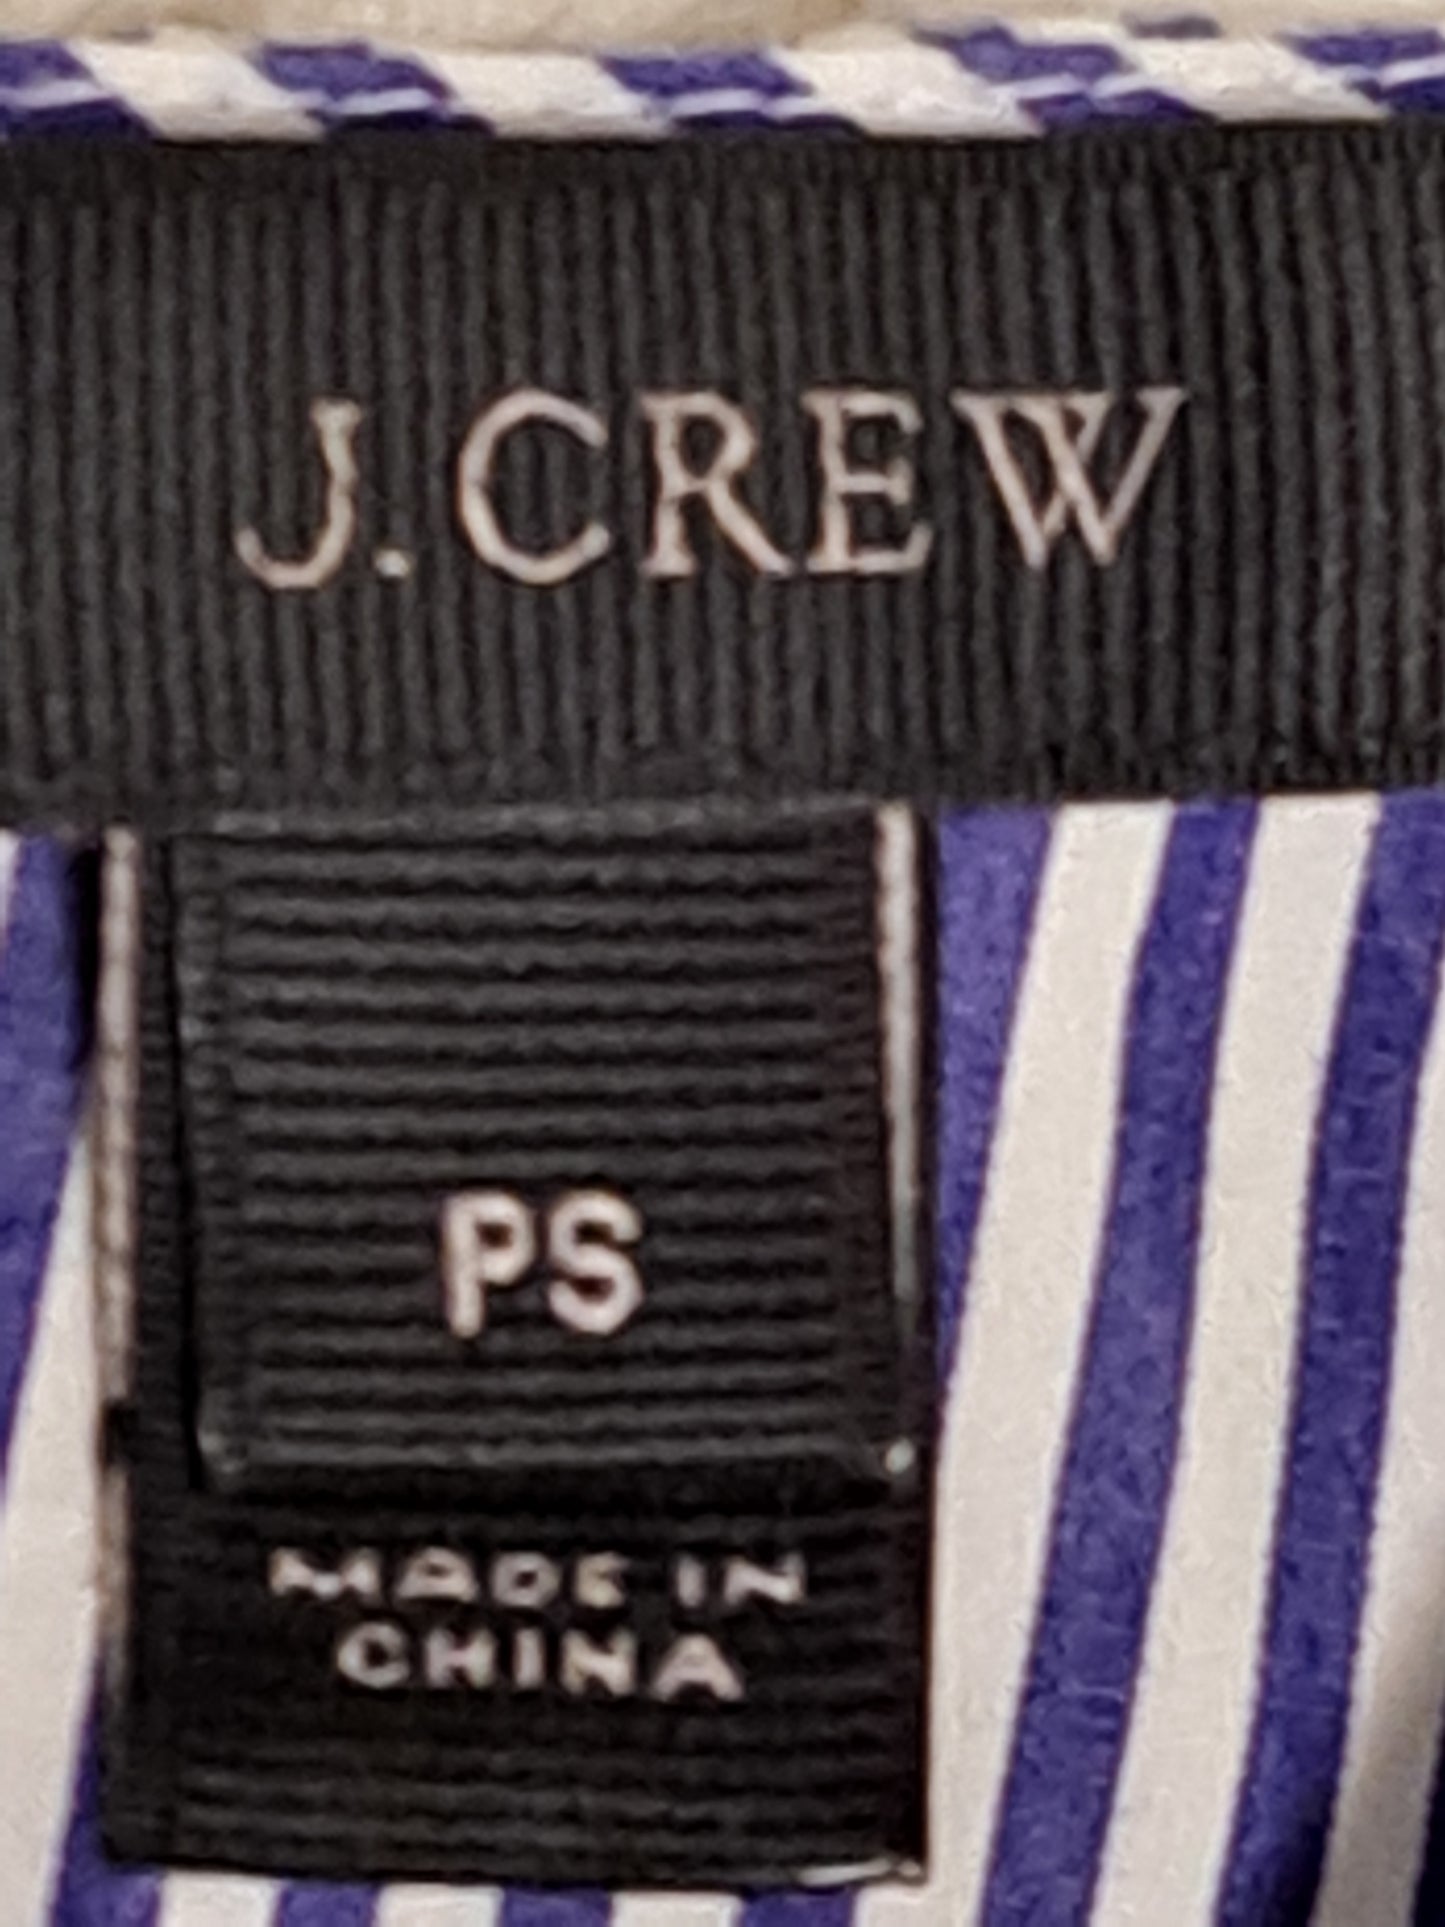 J. Crew Women's Button Up Tank Top Blouse Blue/White - Size Small